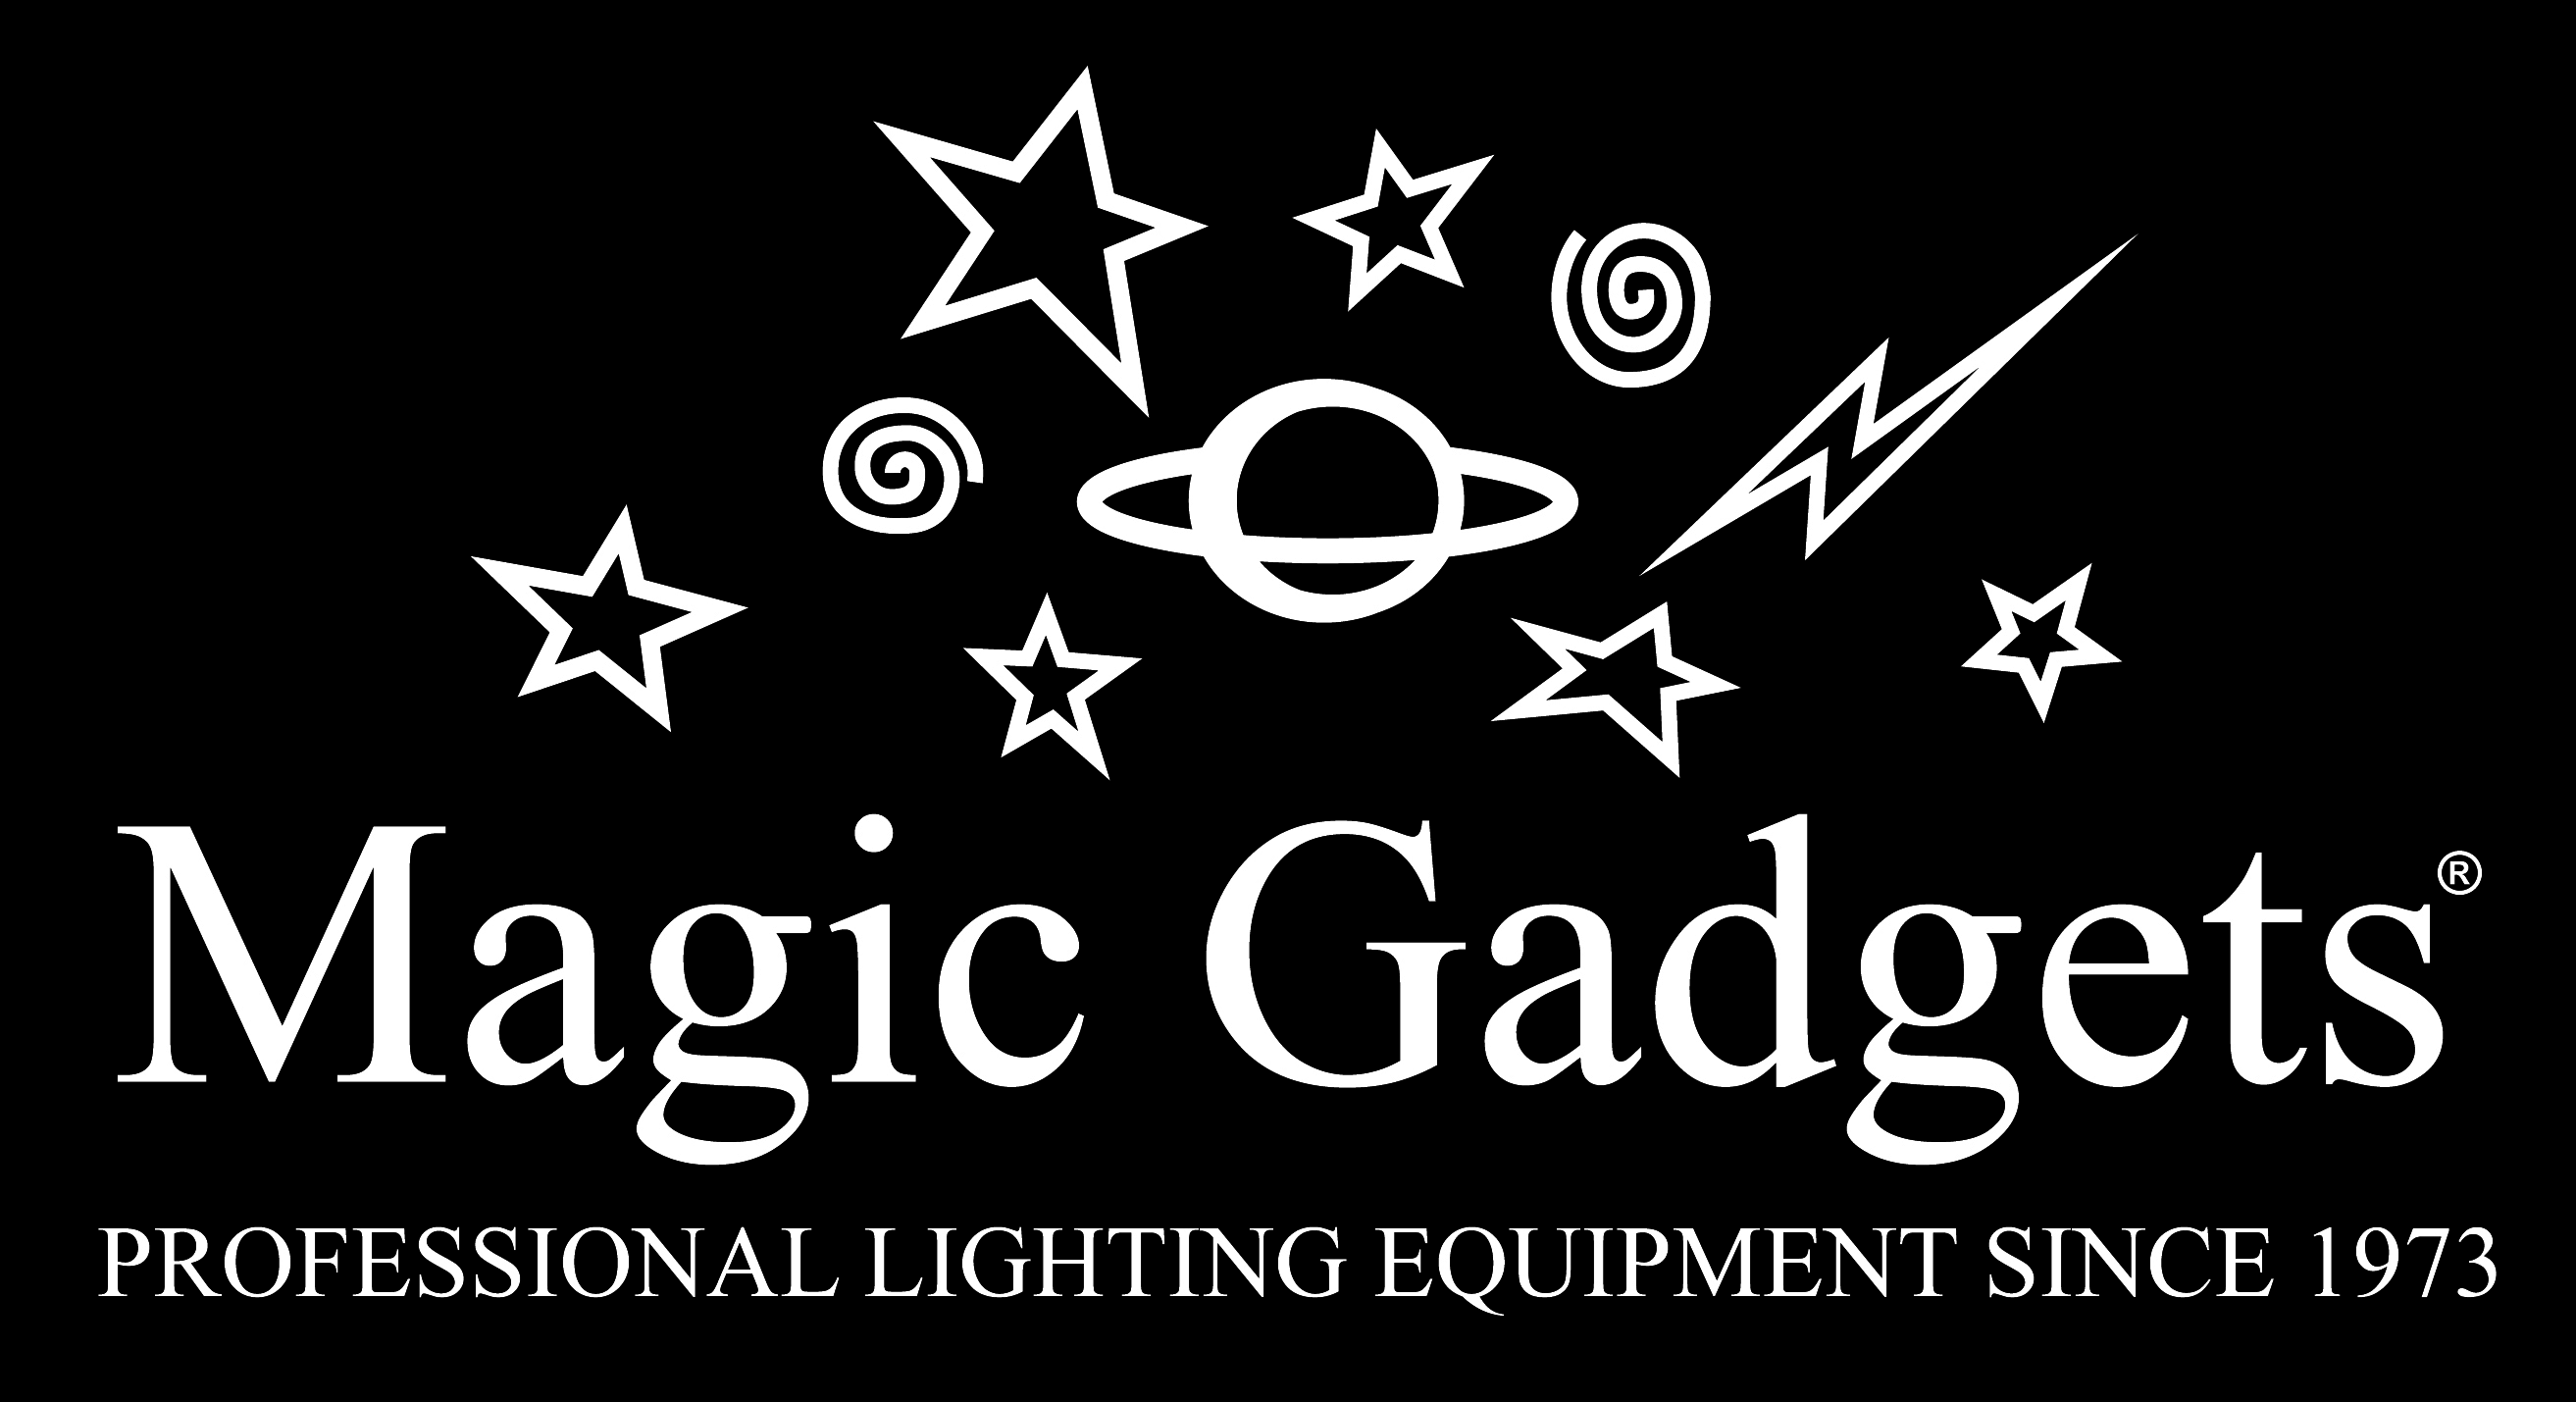 https://www.magicgadgets.com/wp-content/uploads/MG_Logo_Black.jpg